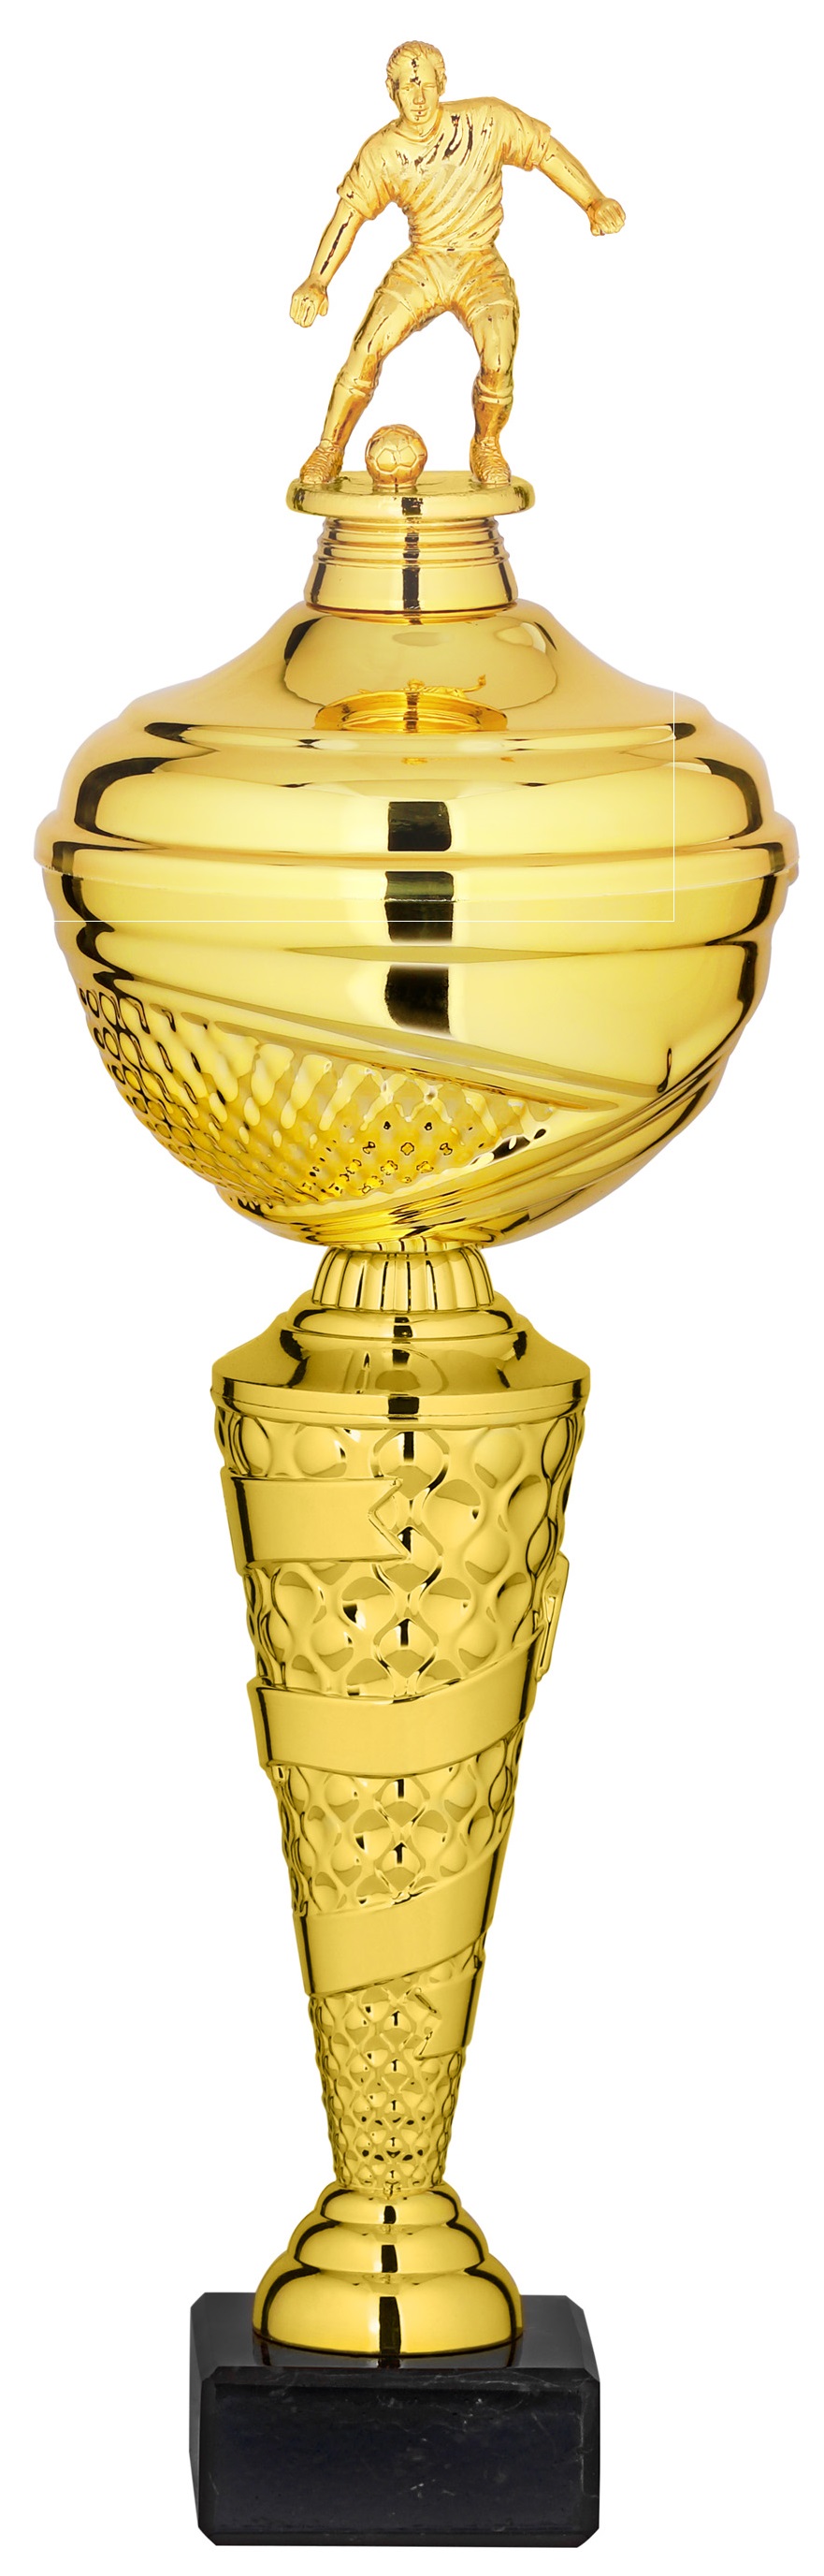 Fußball-Pokal P600-Gold  inkl. Gravur  37,5 cm